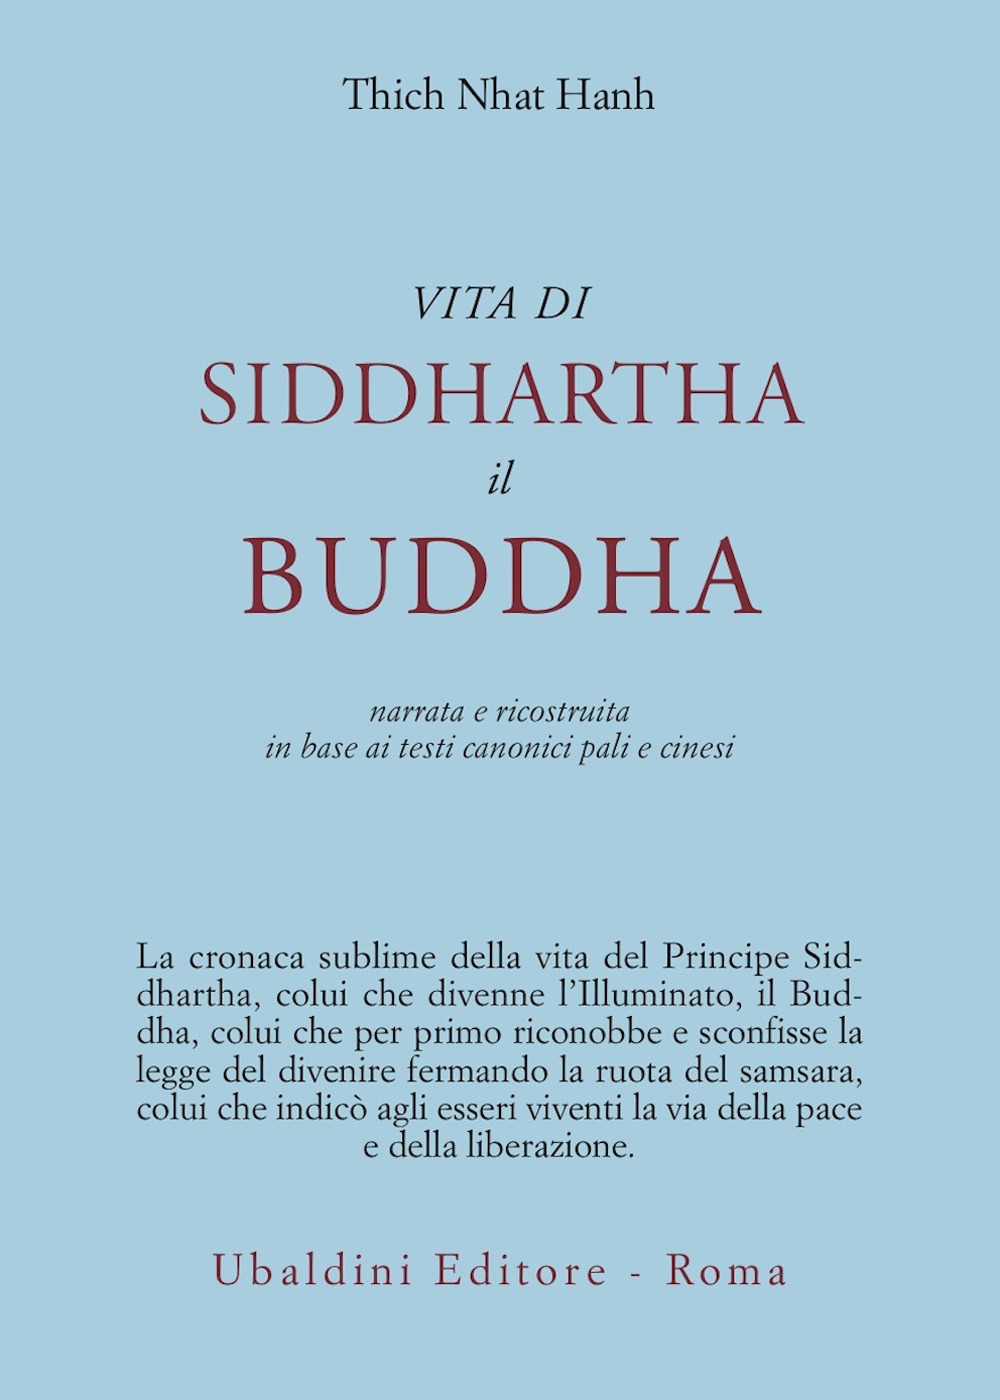 Image of Vita di Siddhartha il Buddha. Narrata e ricostruita in base ai testi canonici pali e cinesi